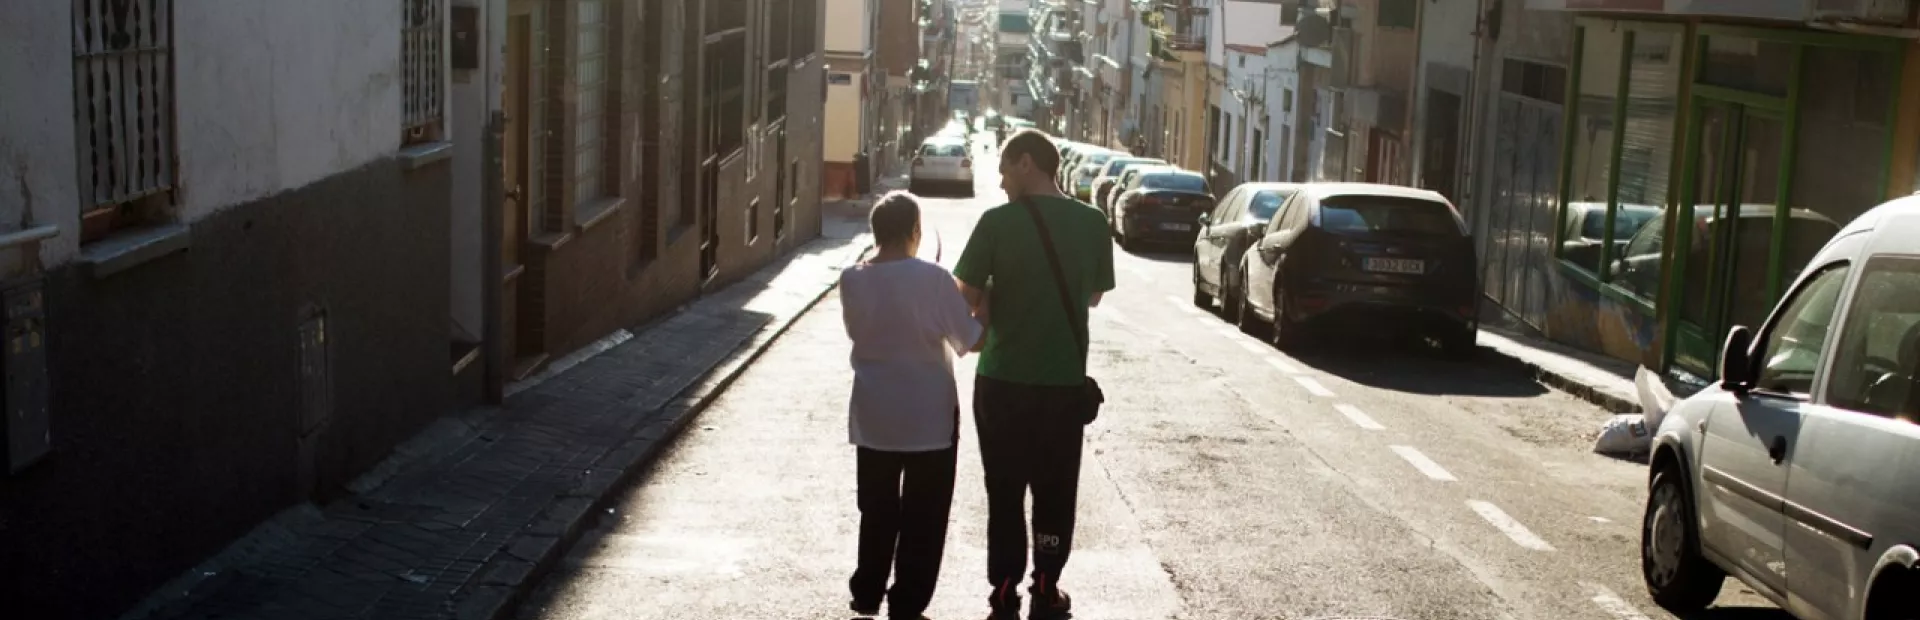 Juan Pedro García Hernández and his mother go for a walk in their neighborhood.